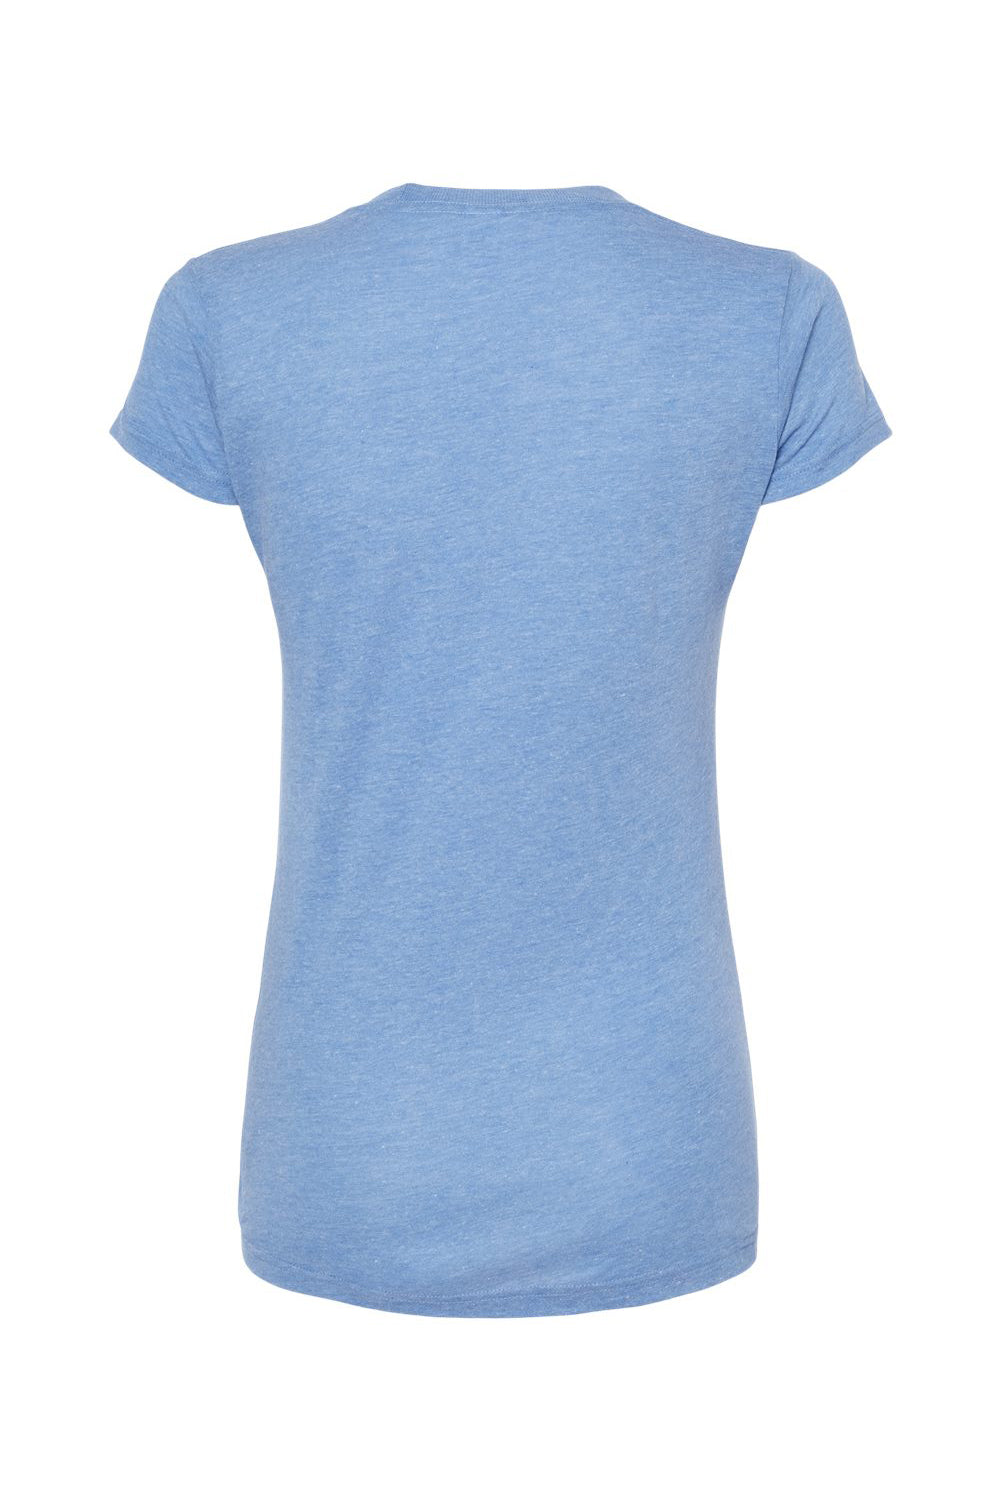 Tultex 253 Womens Short Sleeve Crewneck T-Shirt Athletic Blue Flat Back